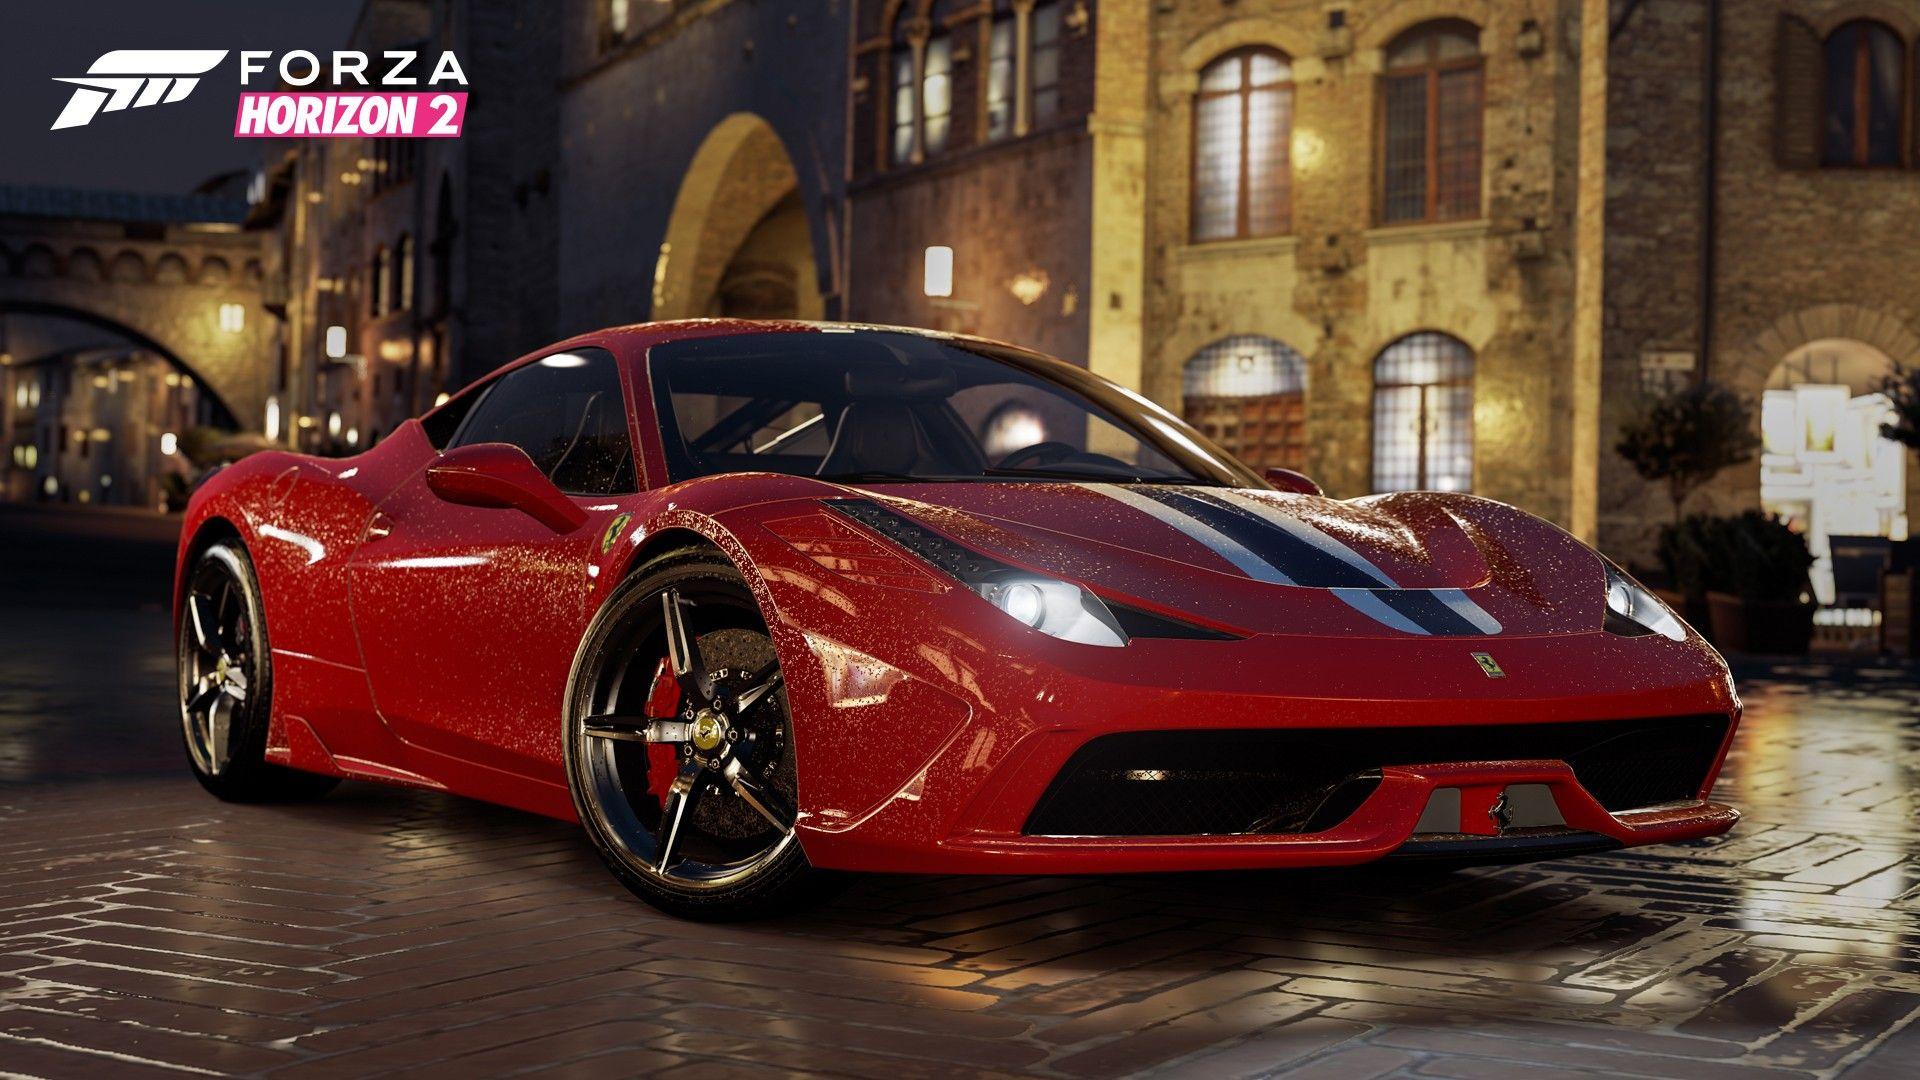 Forza Horizon 2 Background for PC